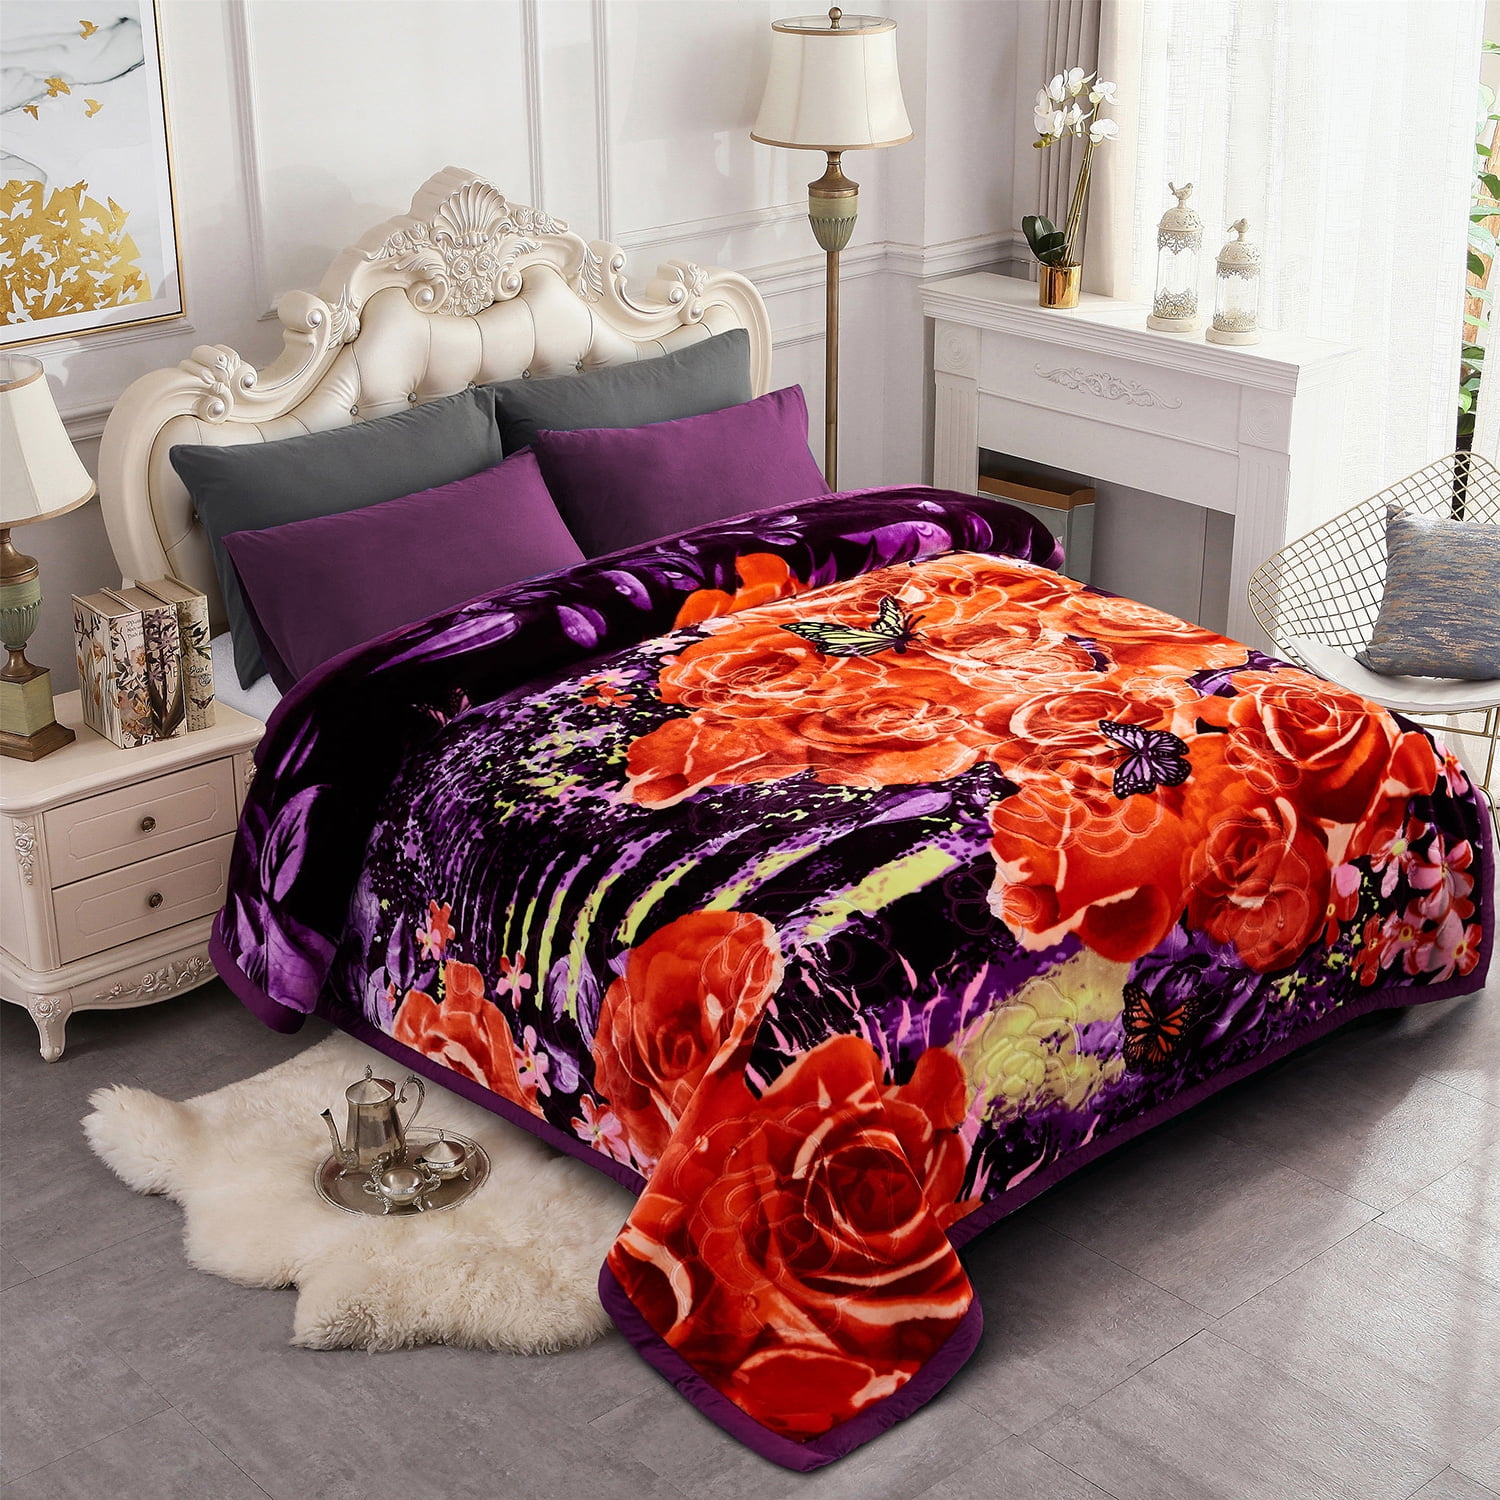 NC Queen Fleece Plush Bed Blanket,2 Ply Heavy Warm Mink Blanket for Winter 79 inchx91 inch,7.5lbs